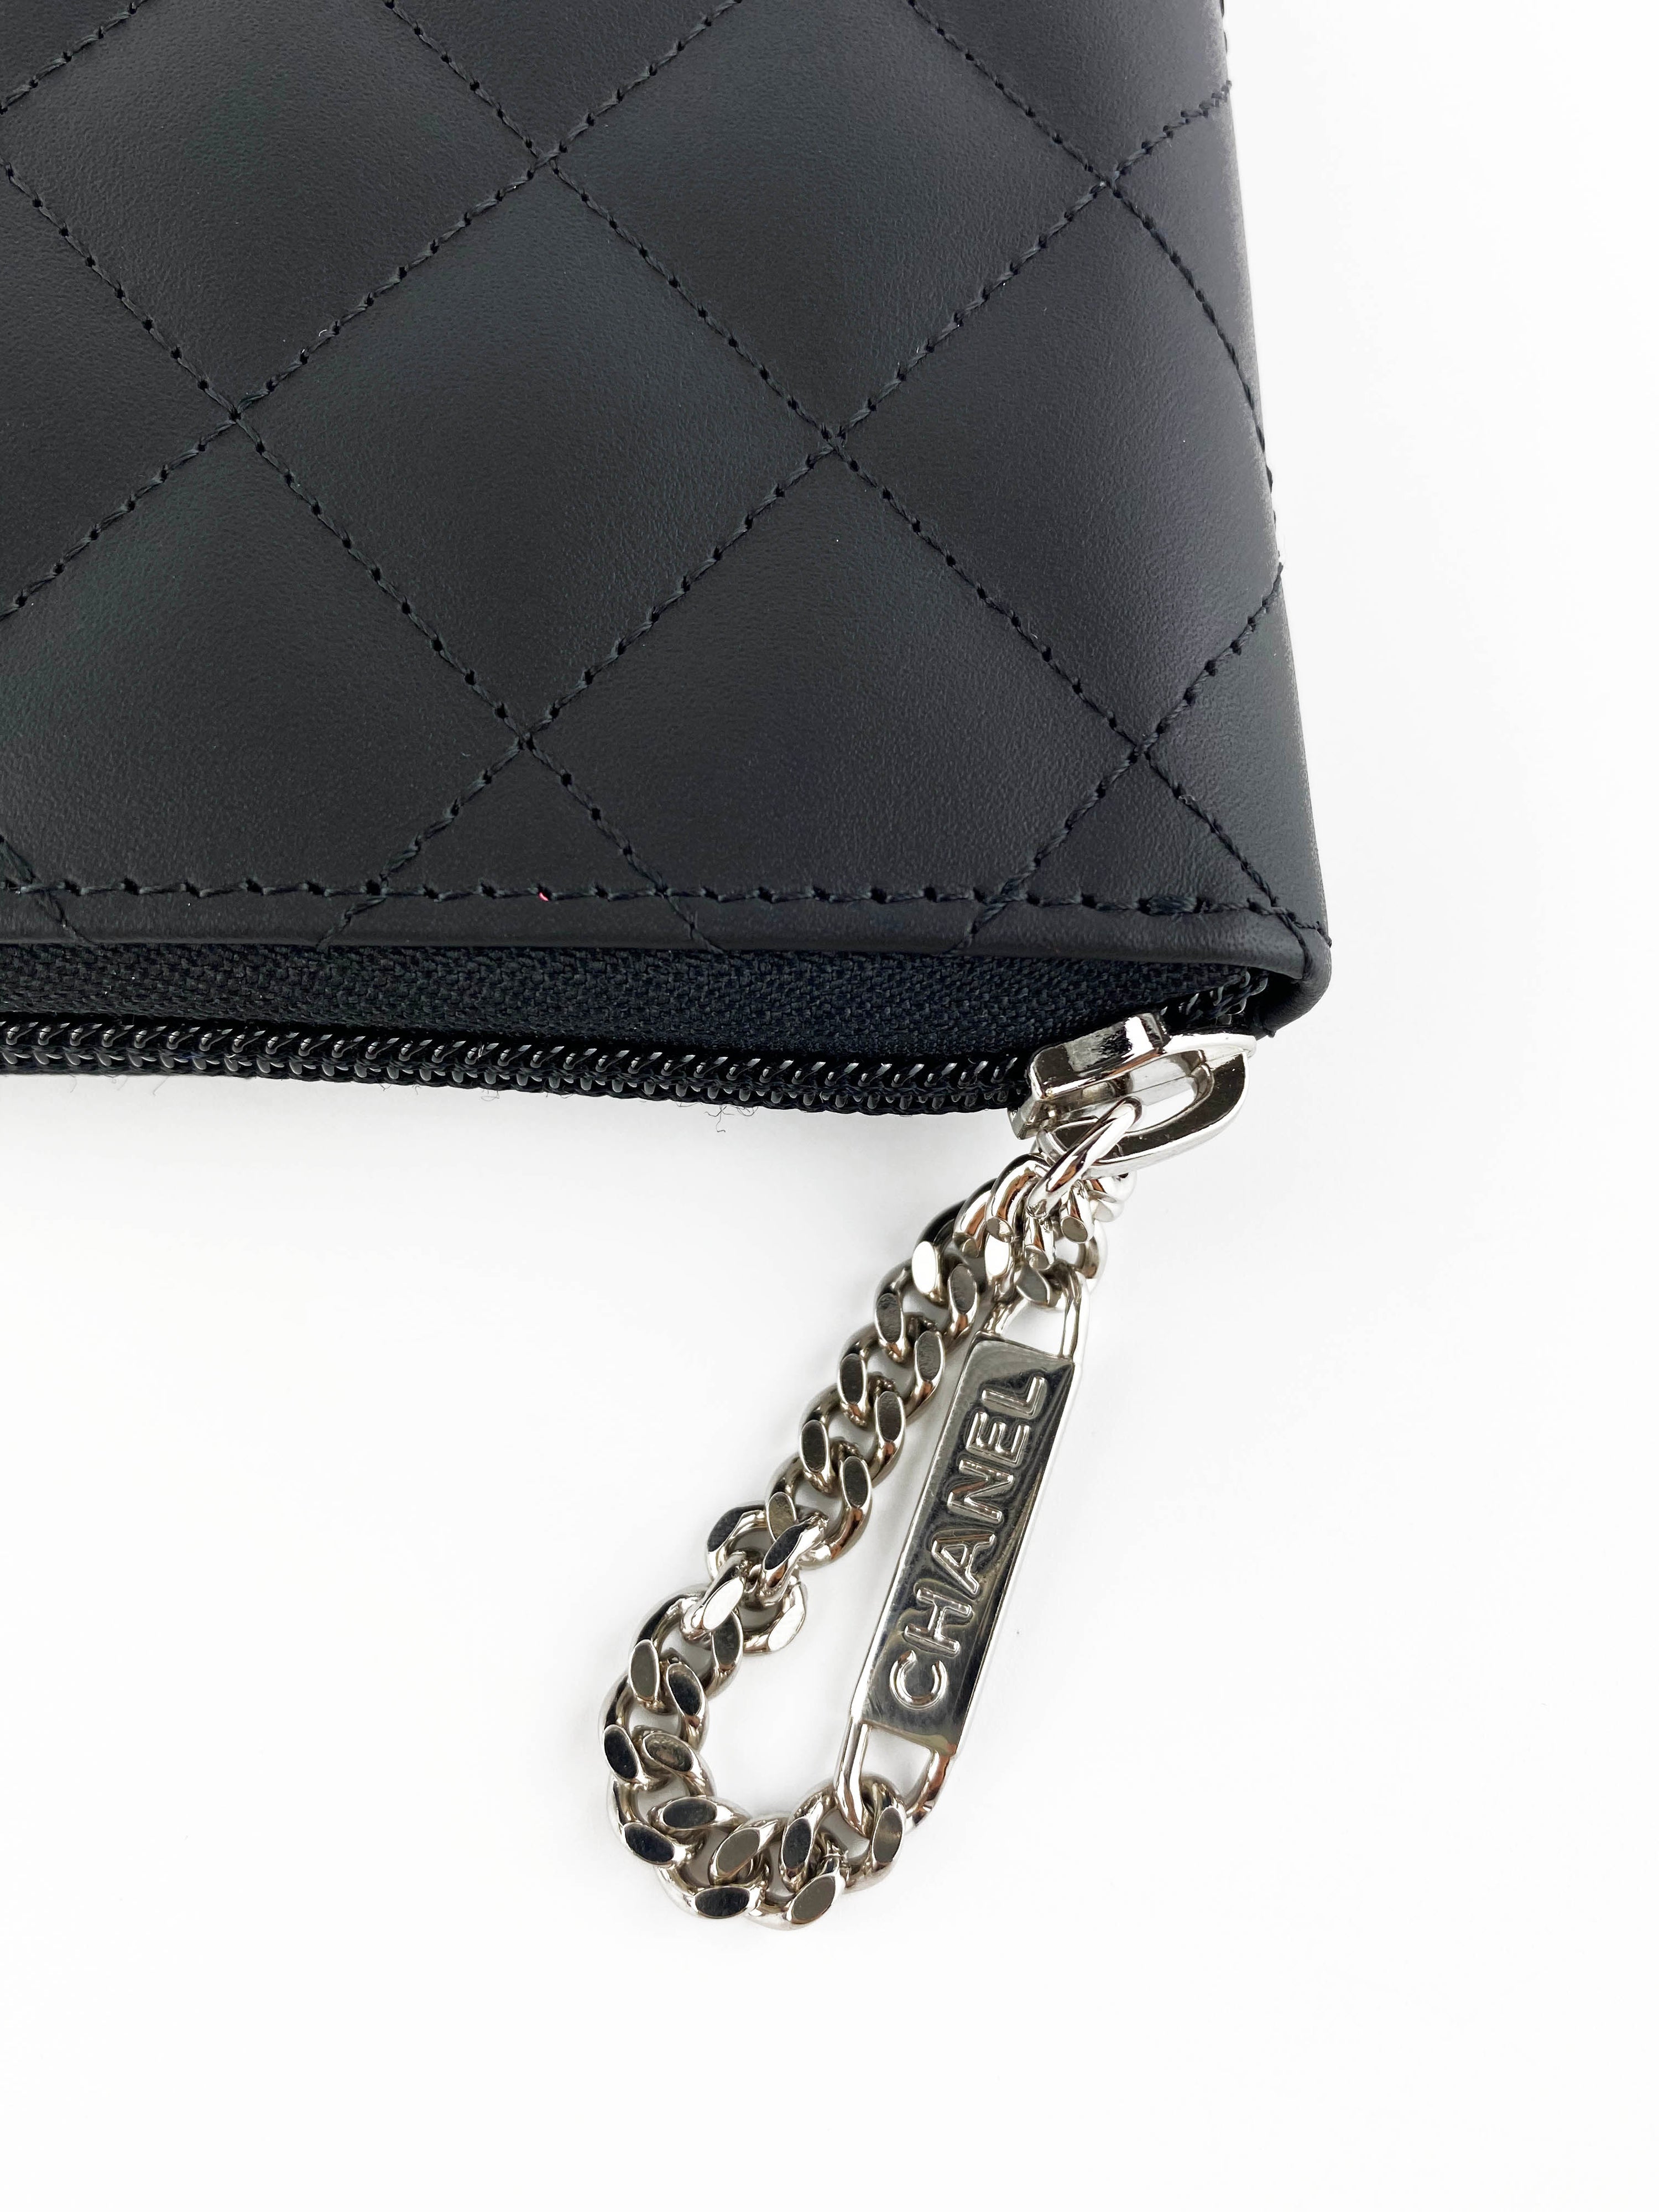 Chanel Black Cambon Bi-fold Wallet